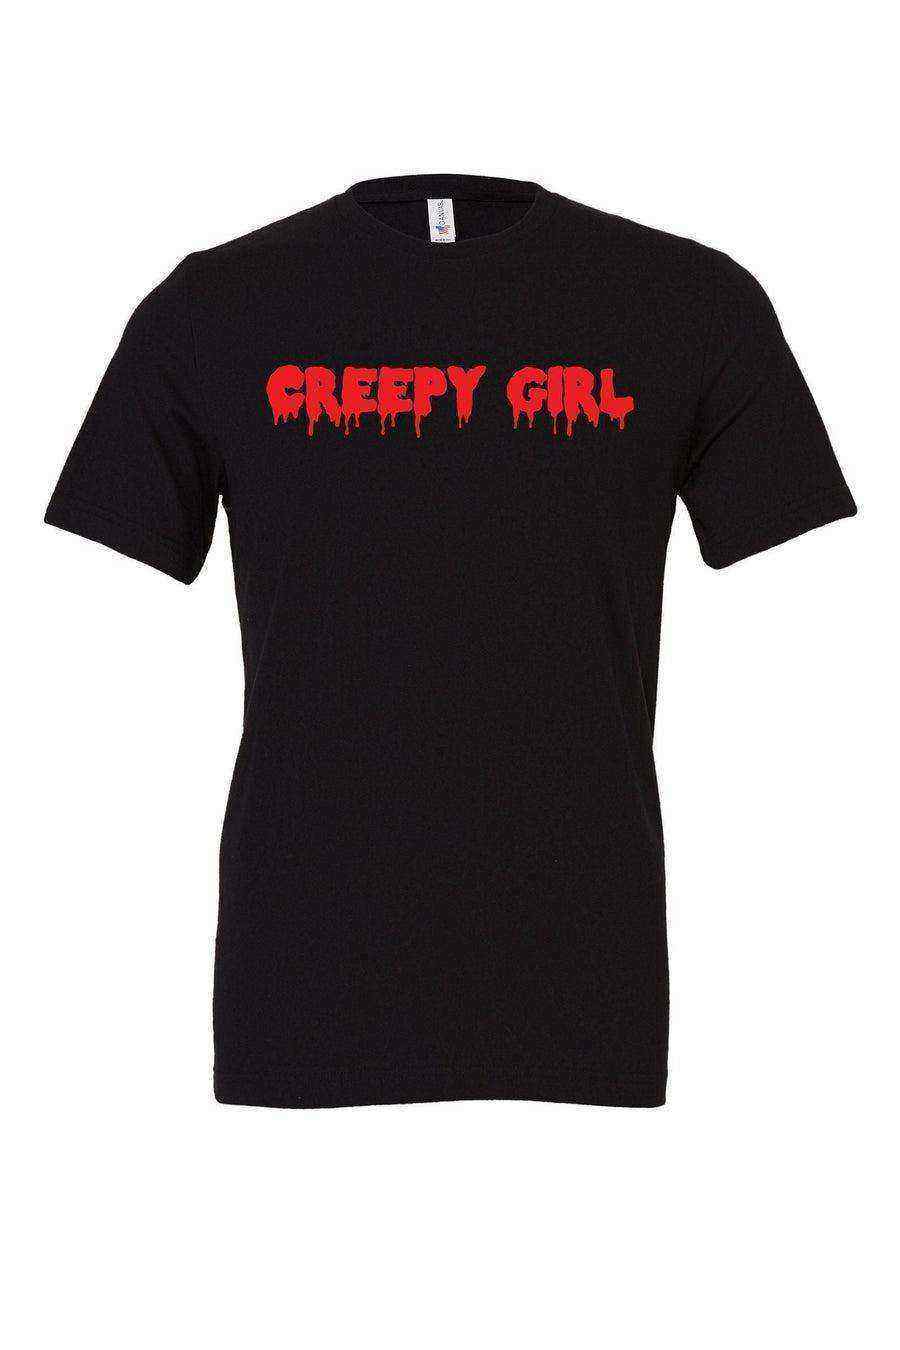 Youth | Creepy Girl Shirt | Creepy Girl Tee | Halloween Shirt - Dylan's Tees